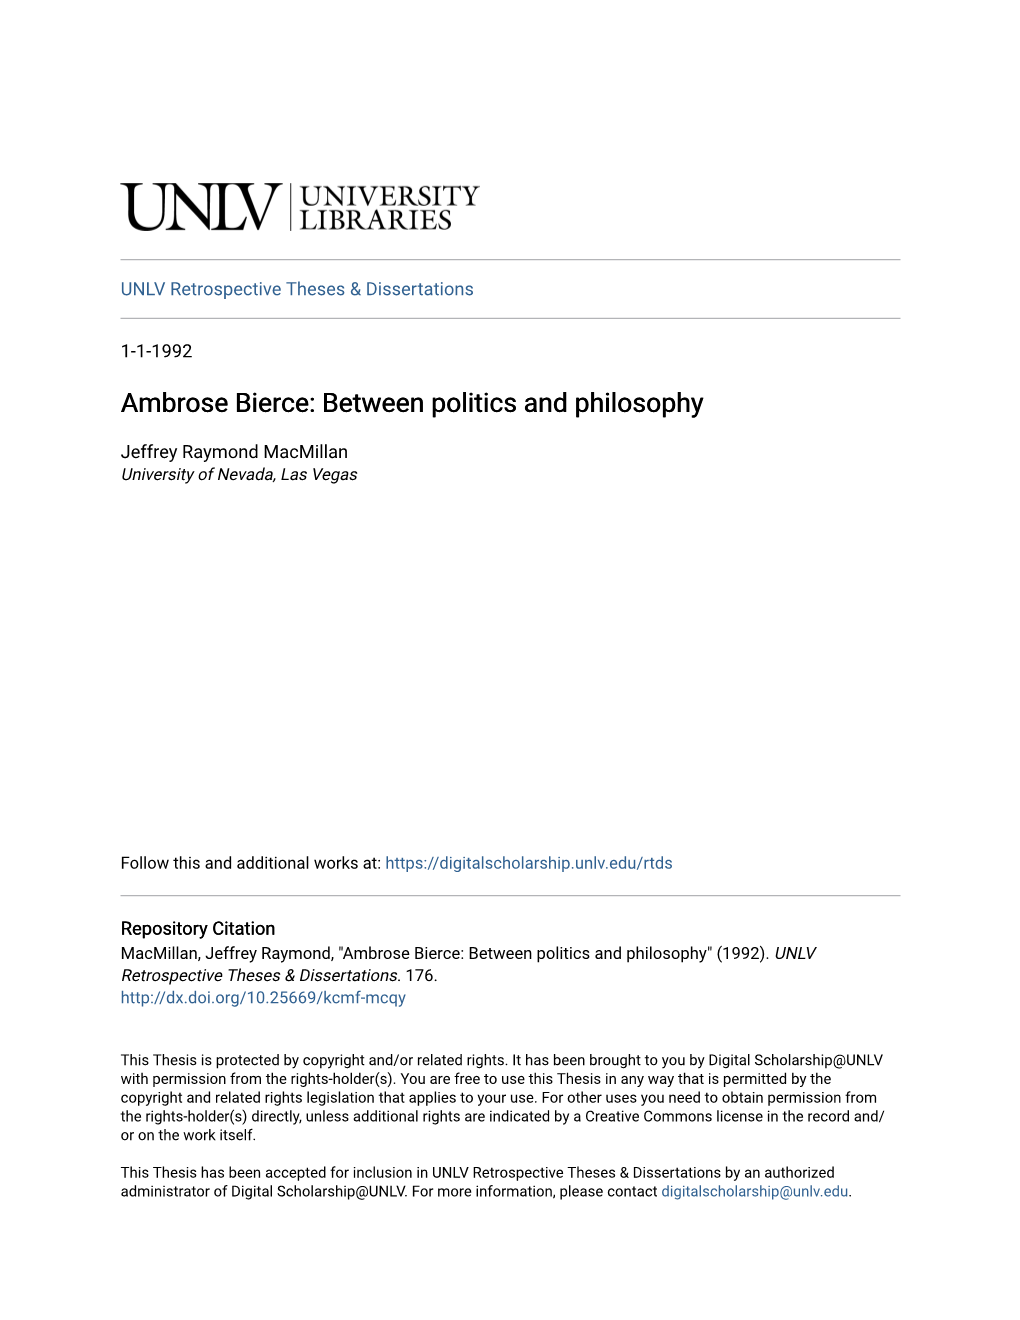 Ambrose Bierce: Between Politics and Philosophy